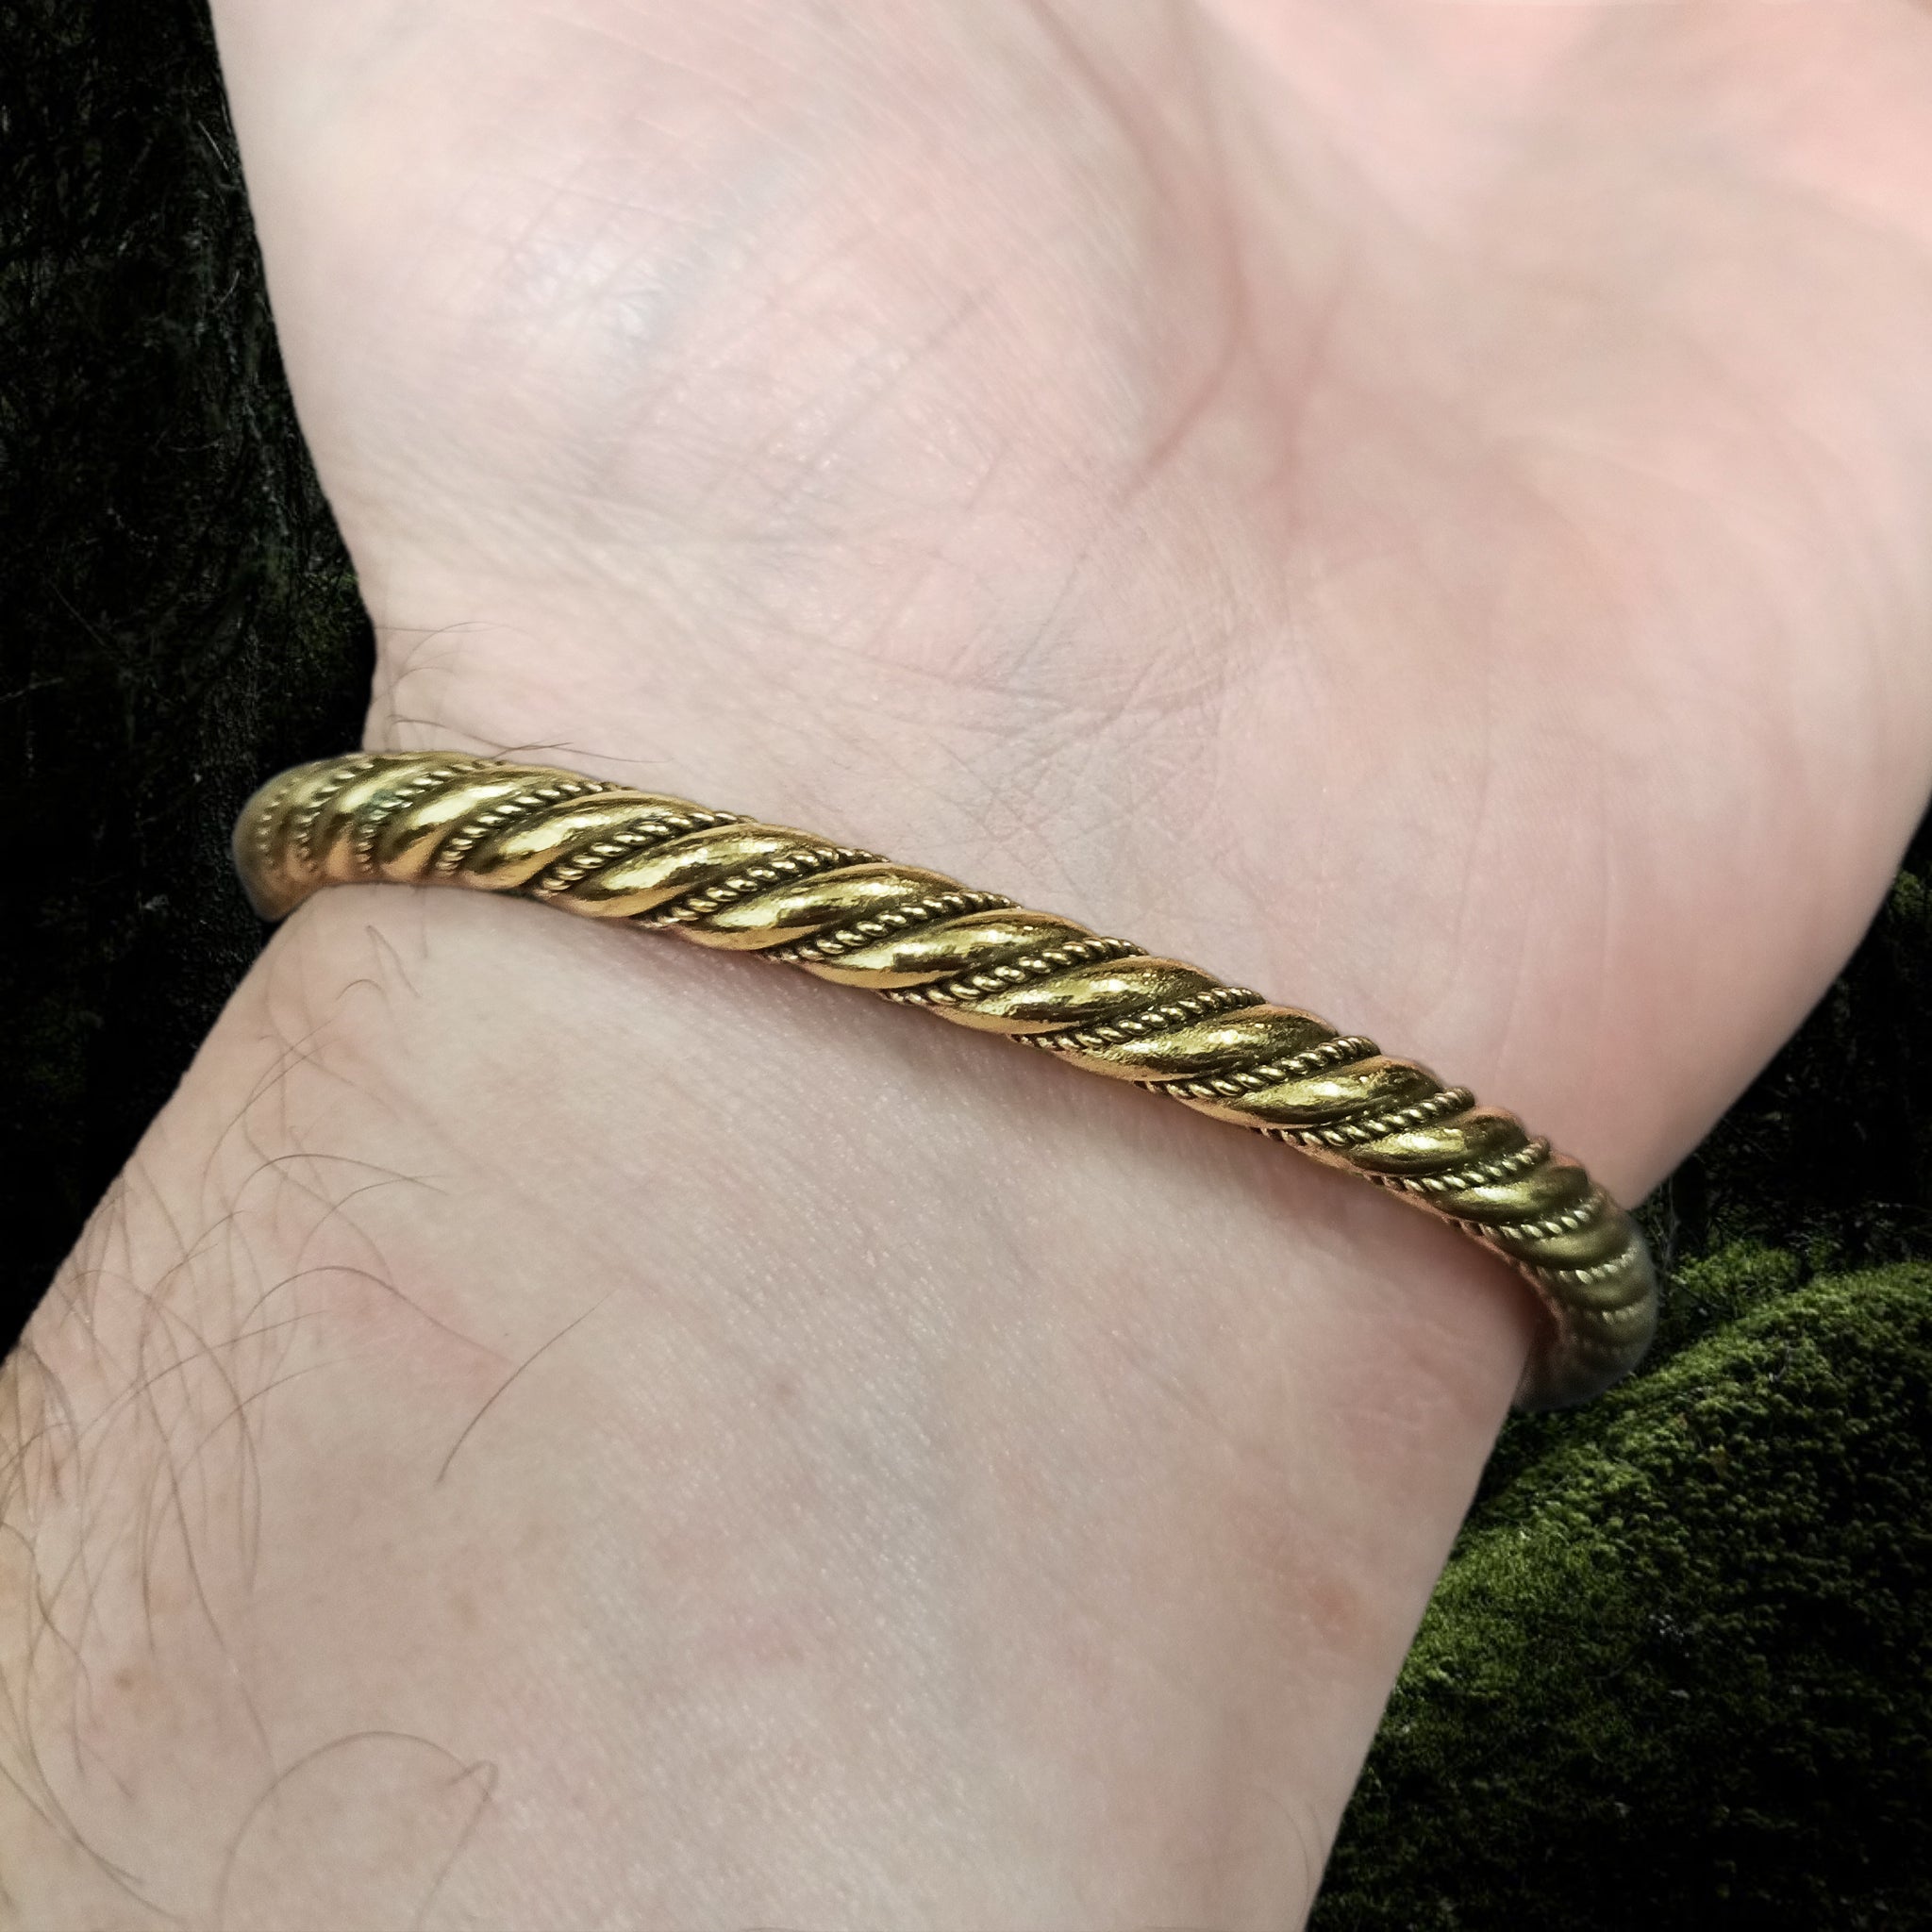 Handmade Twisted Bronze Bracelet With Gotlandic Dragon Heads on Wrist - Underside